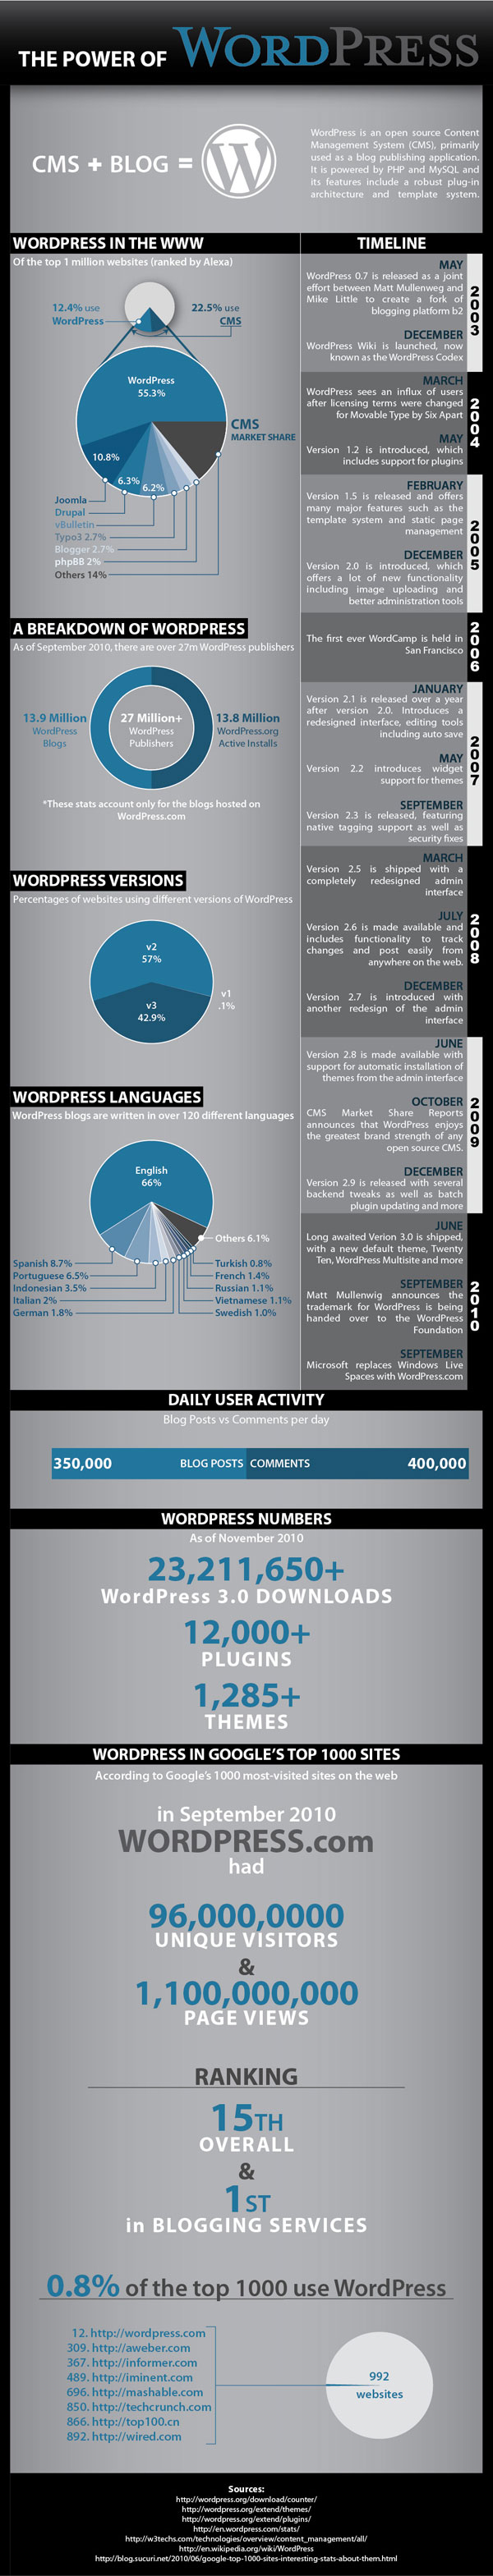 Wordpress Infographic